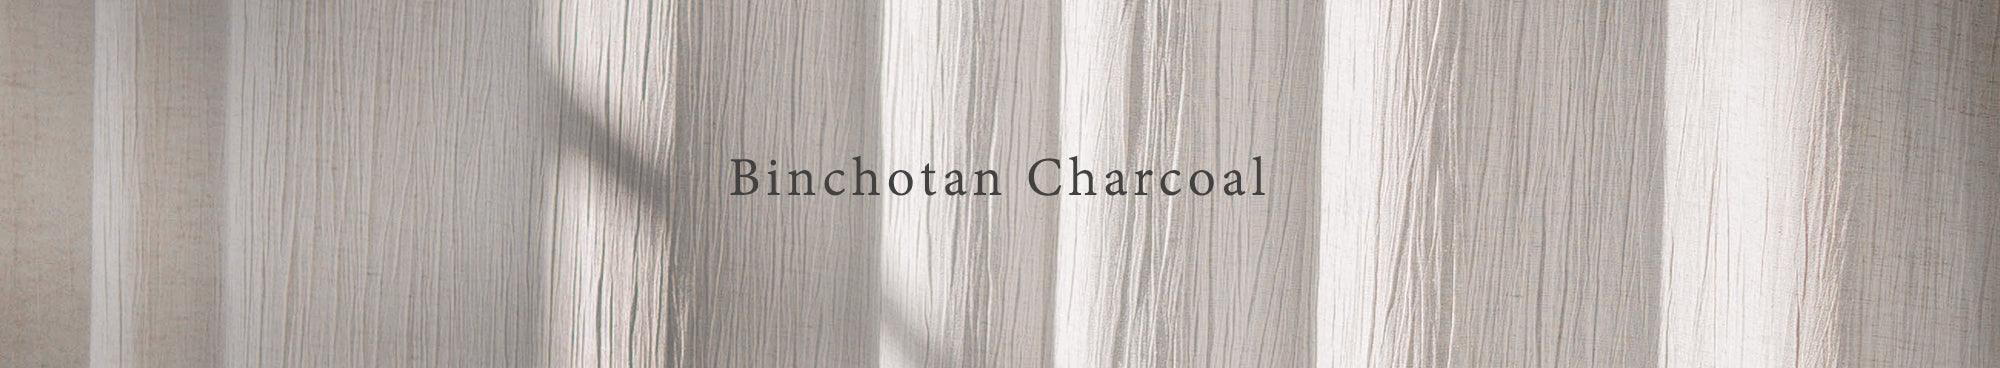 Binchotan Charcoal - Rikumo